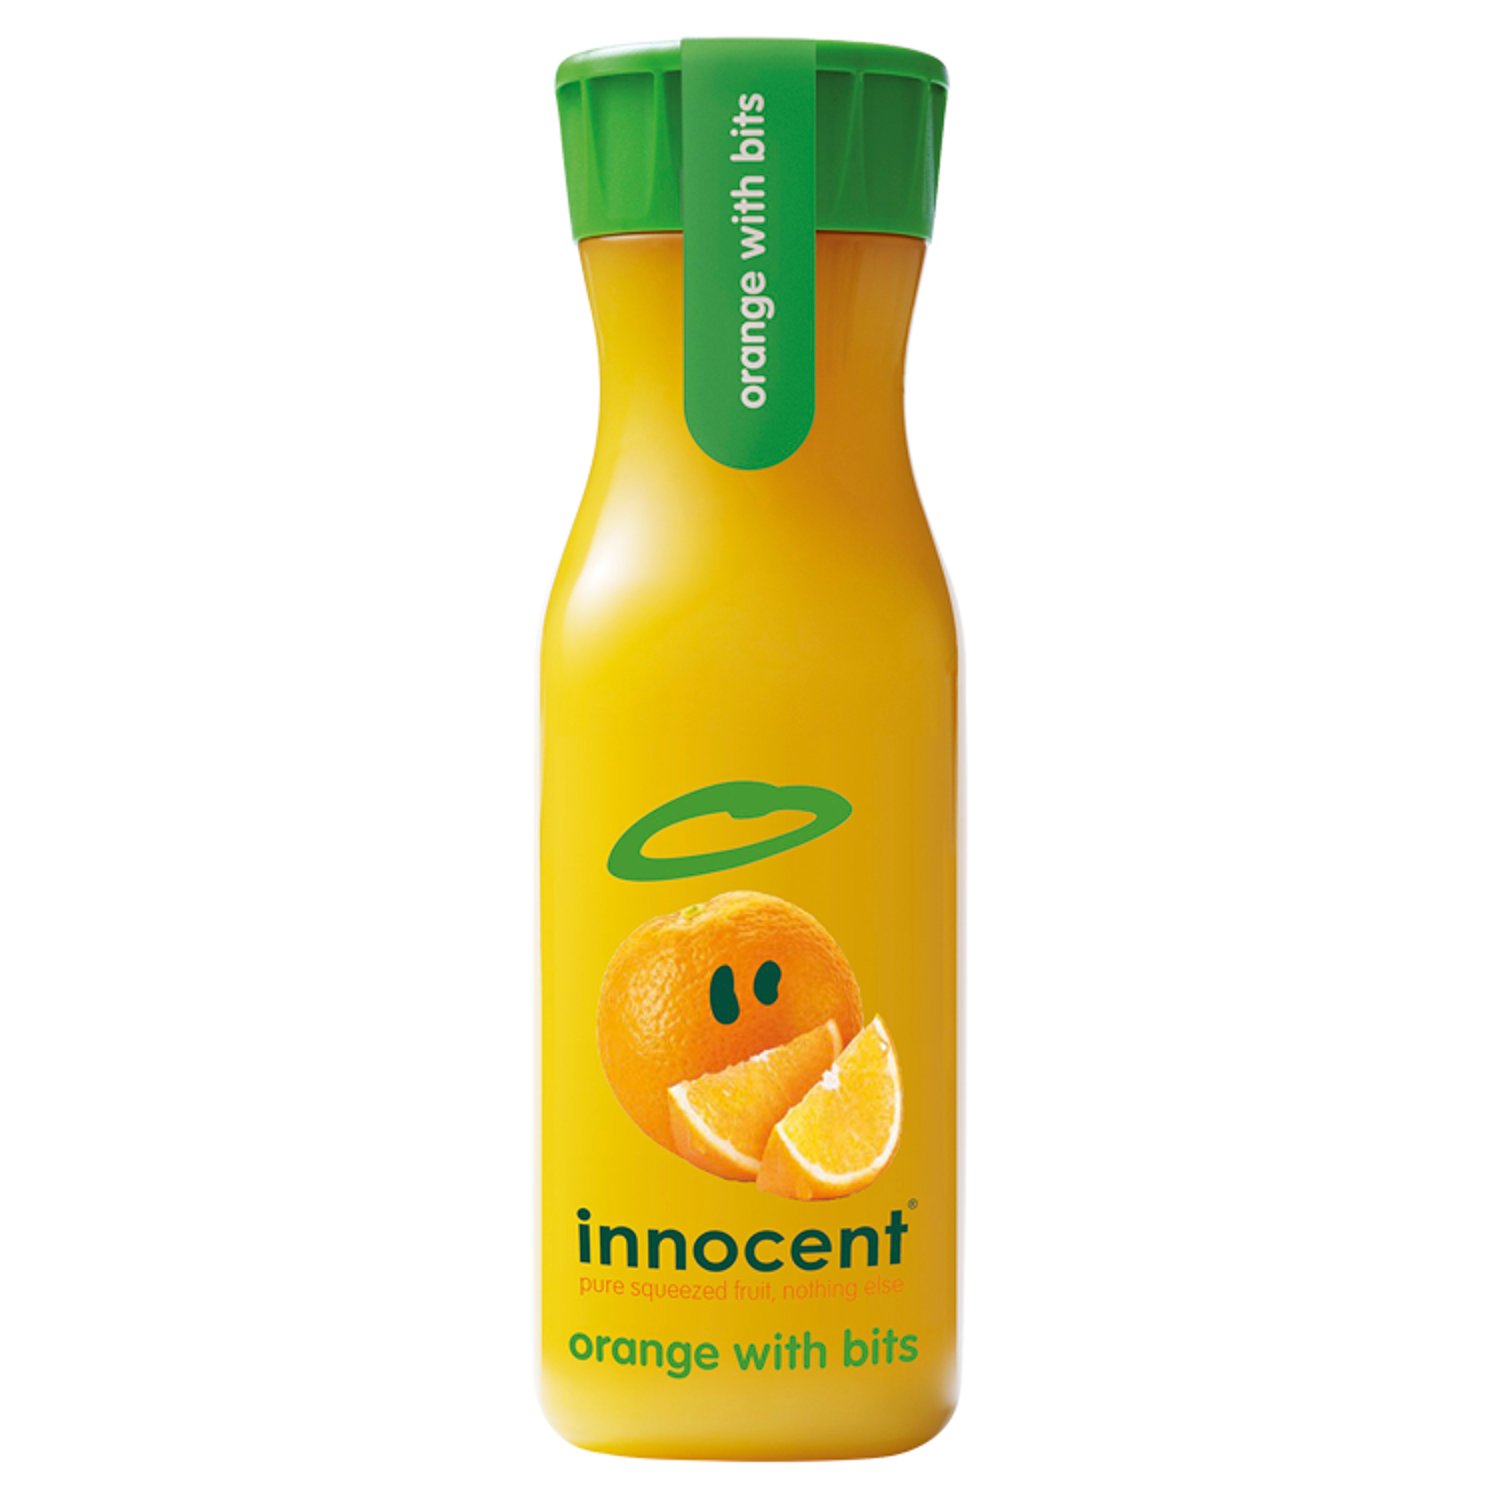 Innocent Orange Juice with Bits (330 ml)